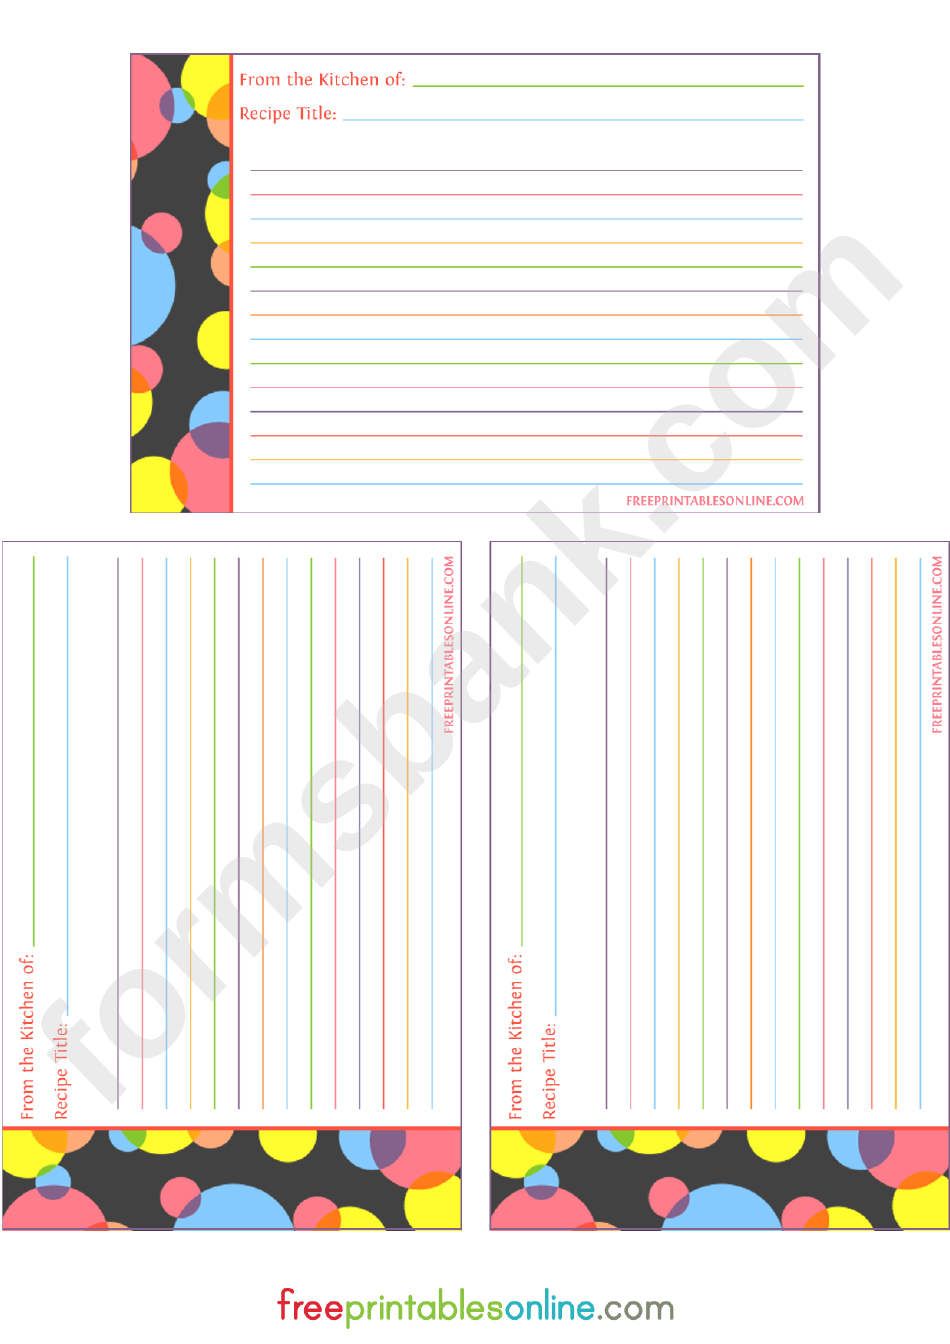 Recipe Card Template - Retro Spot 4x6